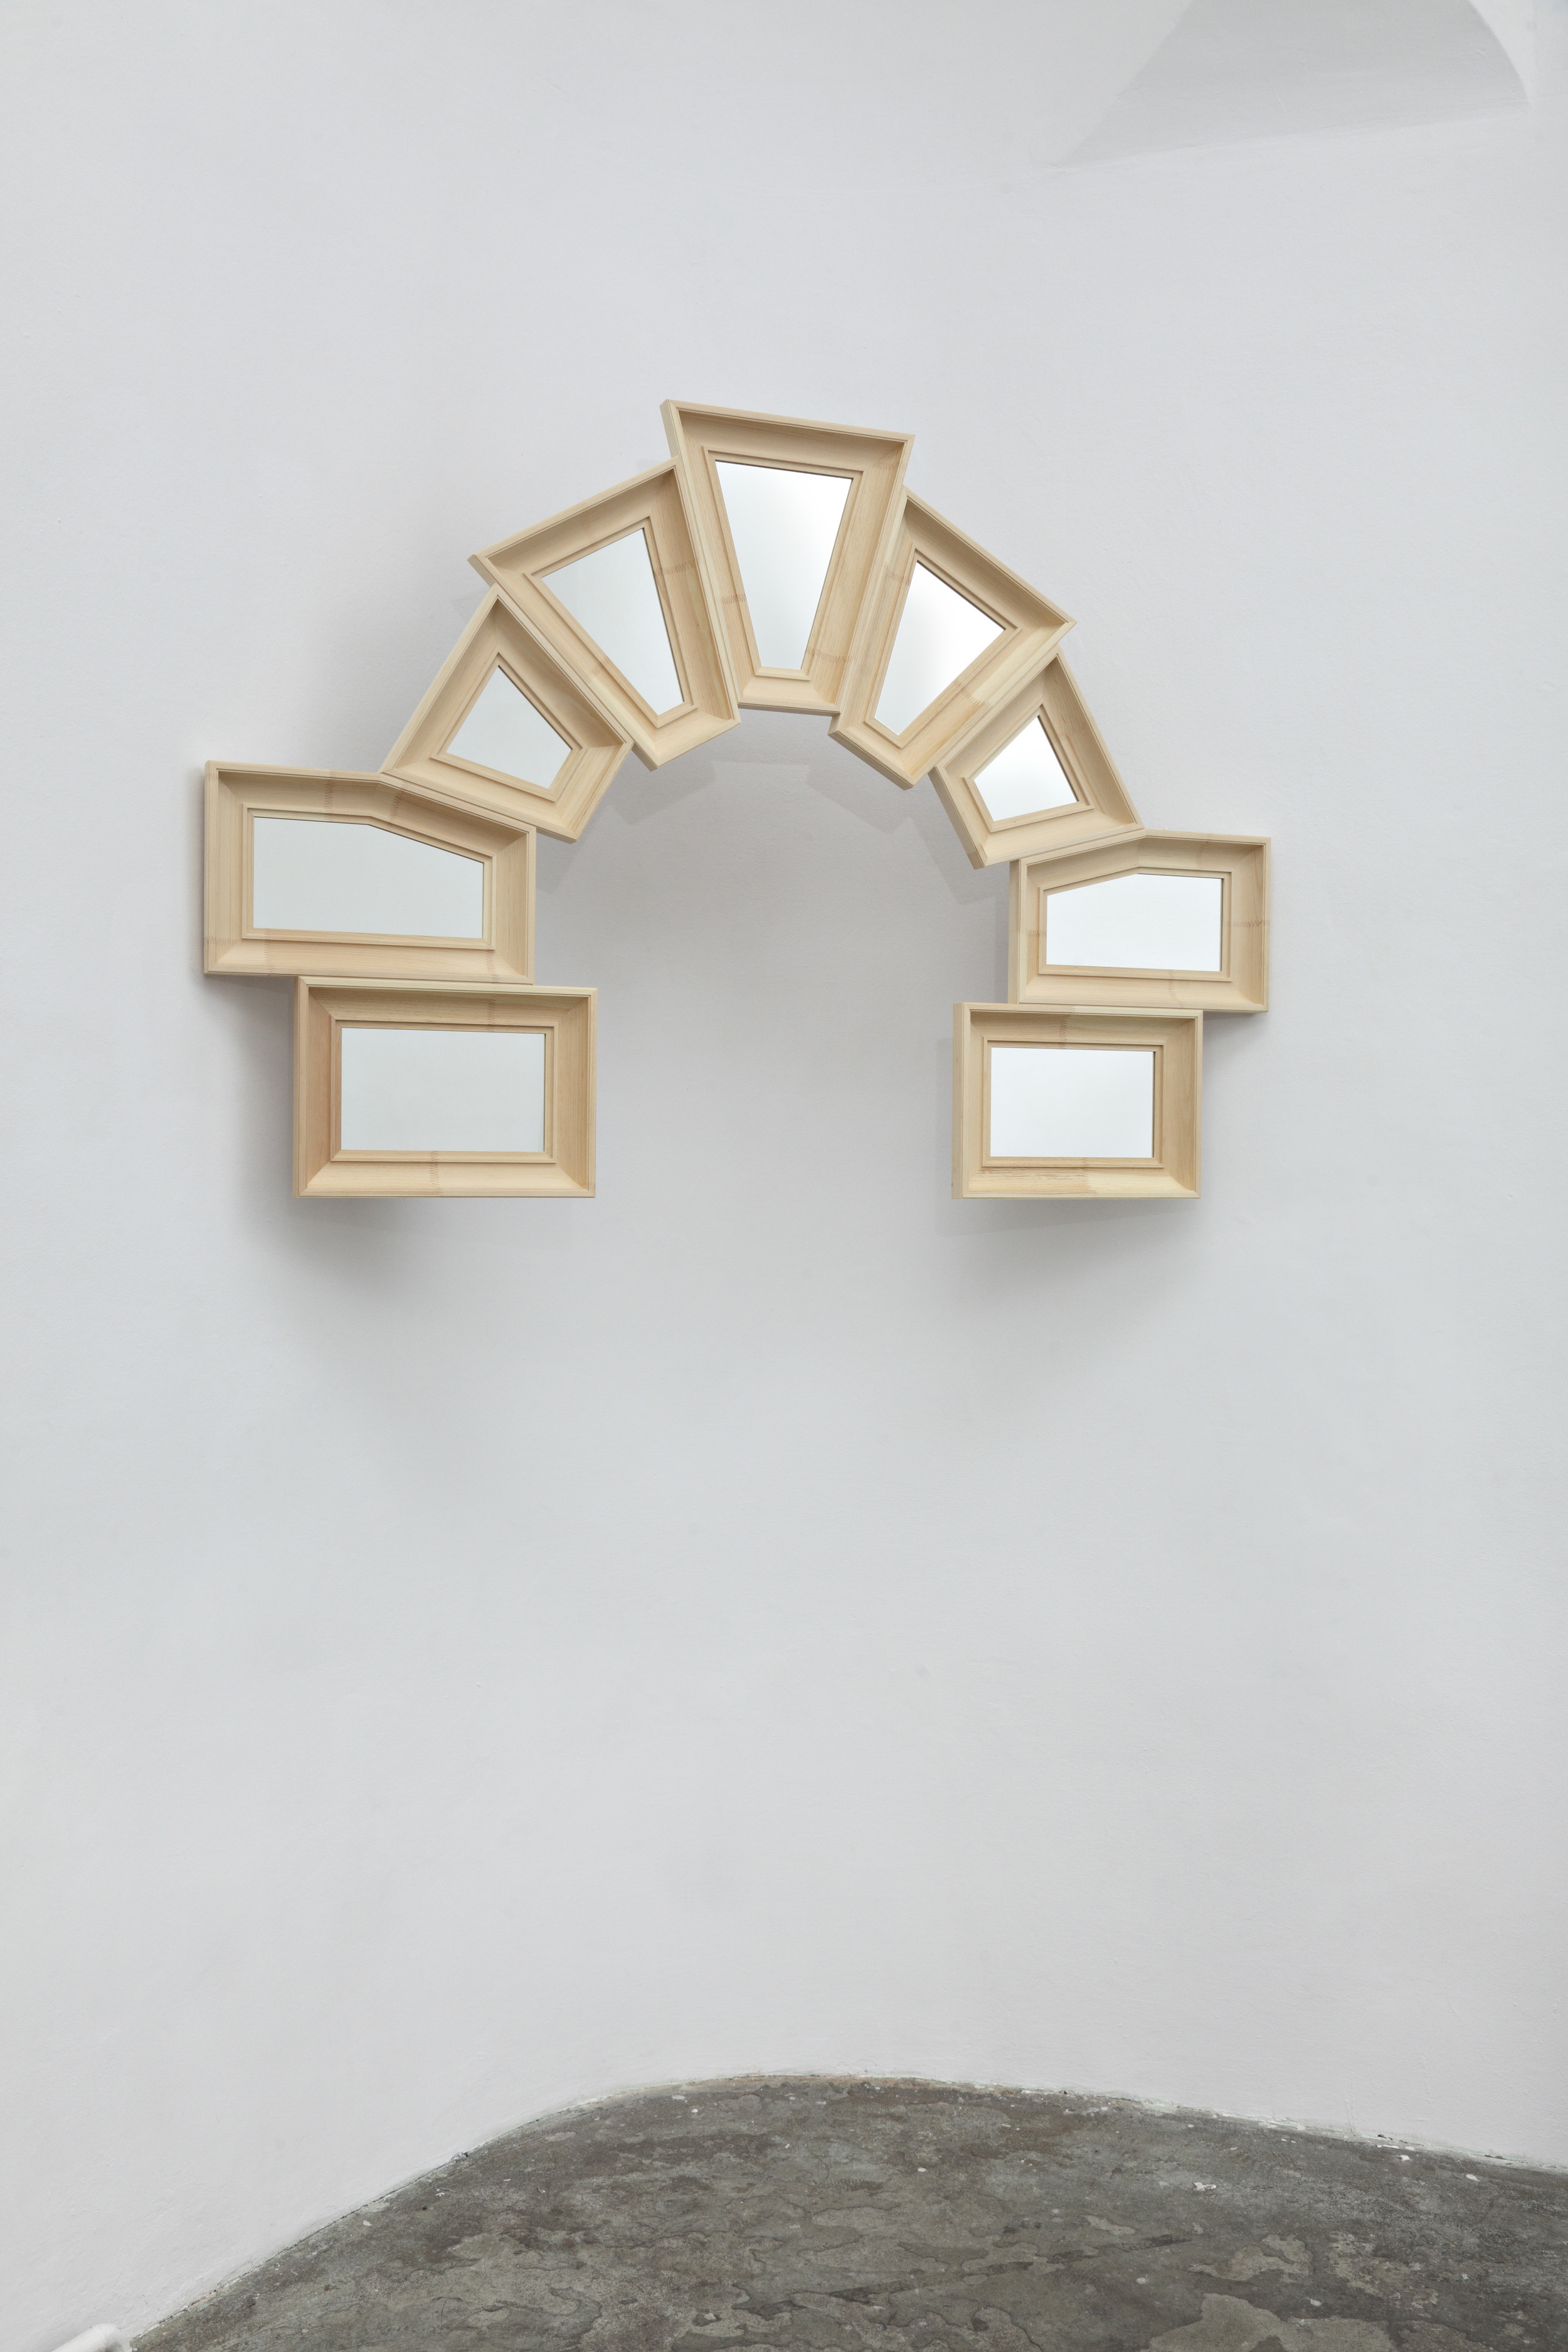  Robert &amp; Trix Haussmann Lehrstück 1987/2014 Wood and acrylic mirror 177 x 122.5 x 6cm/ 69.7 x 48.2 x 2.4in 